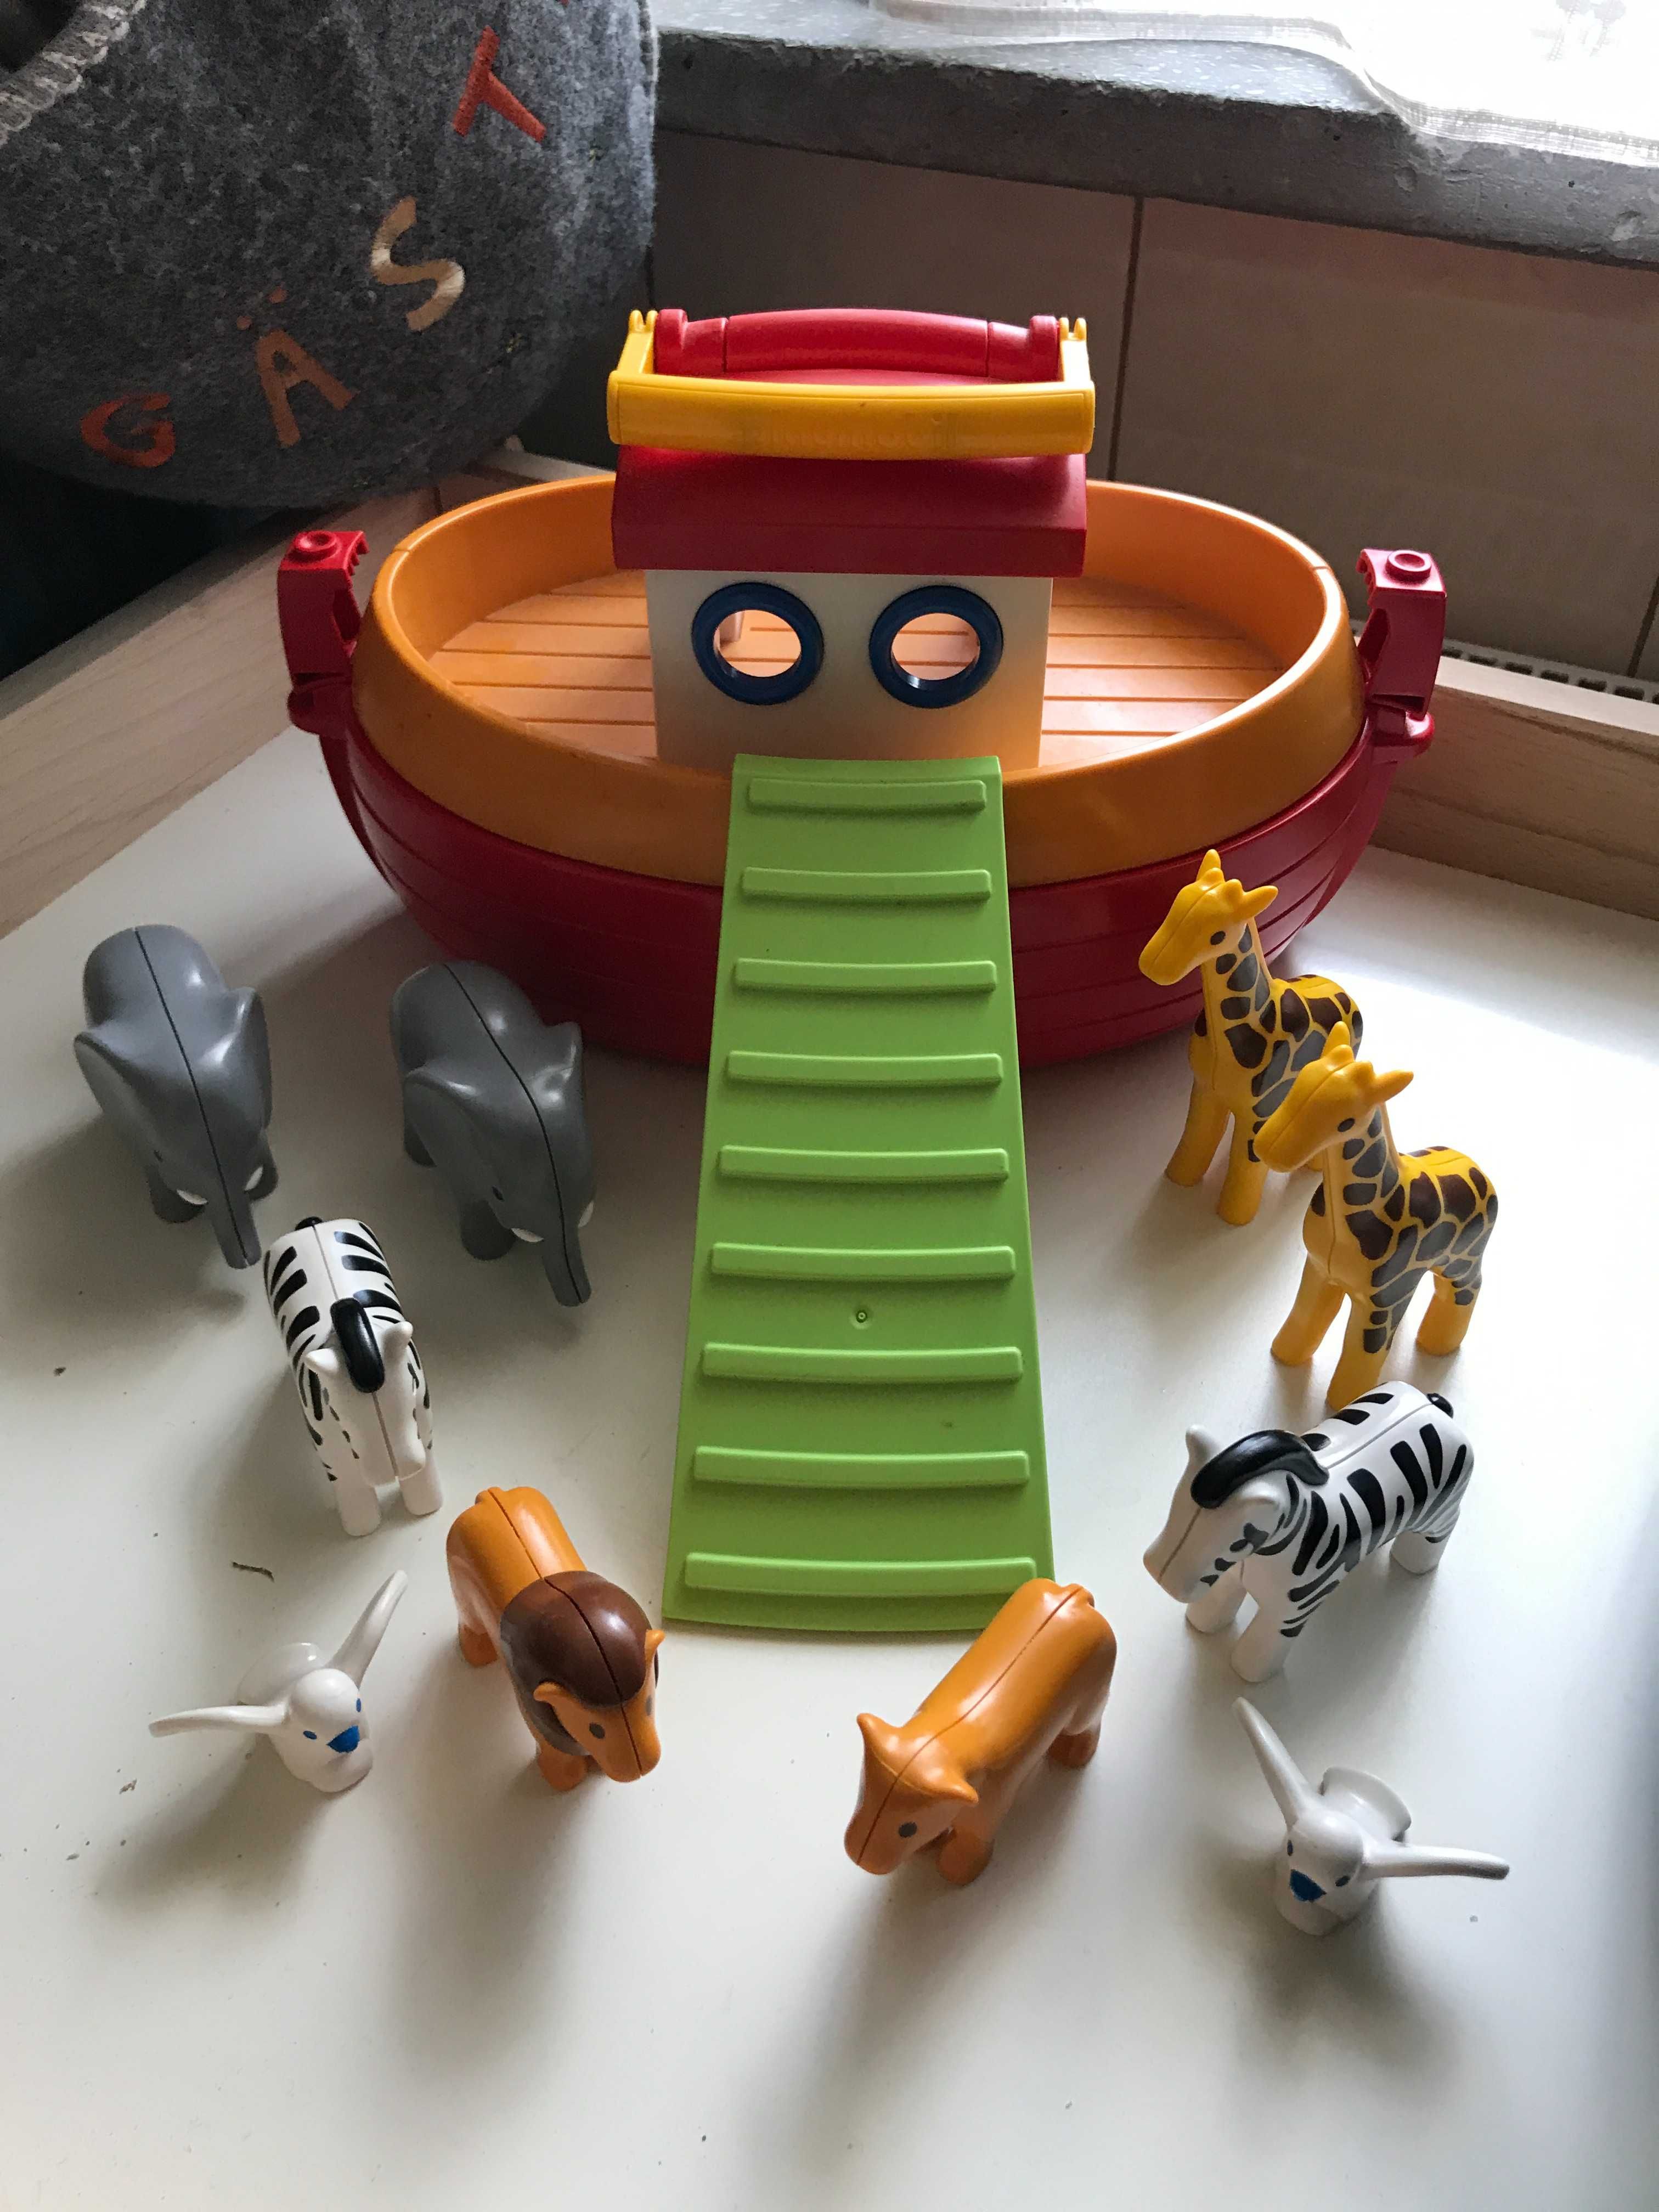 Sprzedam zestaw Playmobile Arka Noego